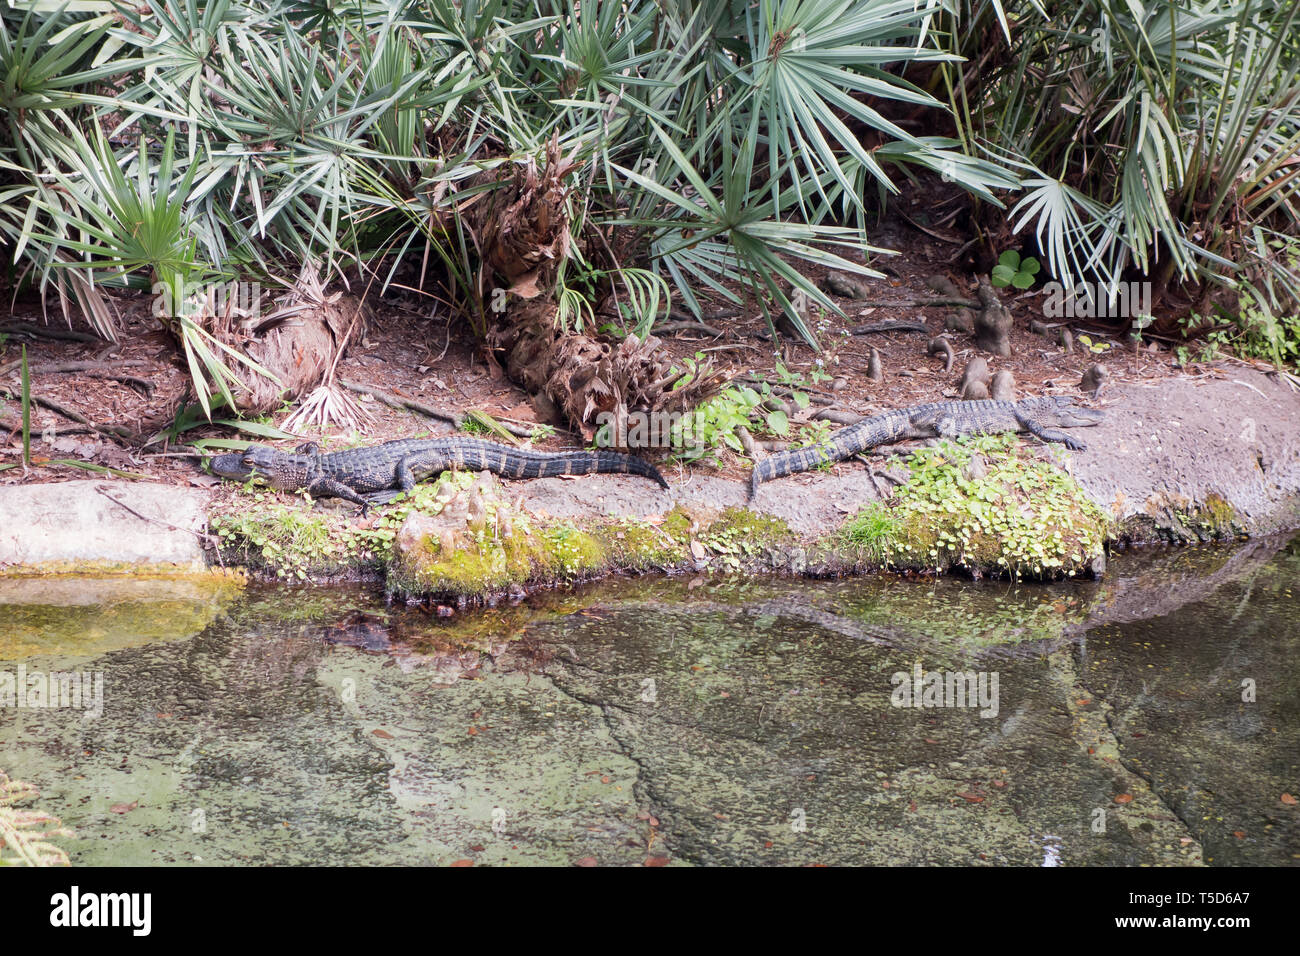 American Alligators on display at Seaworld in Orlando Stock Photo